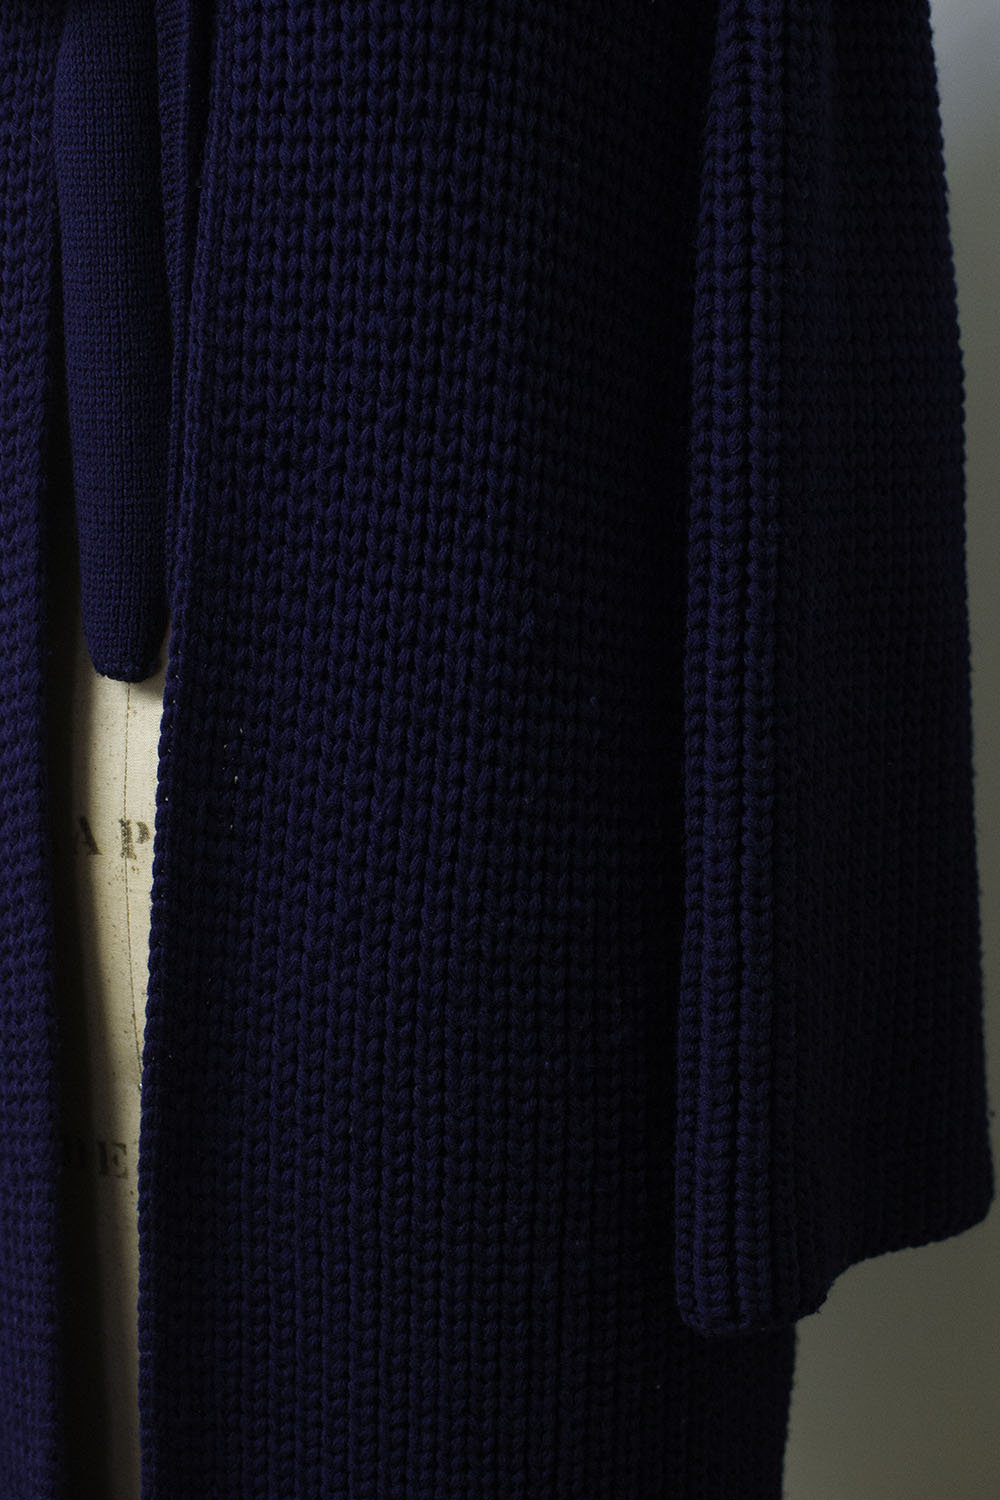 SALE 1960s Sweater Coat / 60s Goldworm Navy Blue Duster